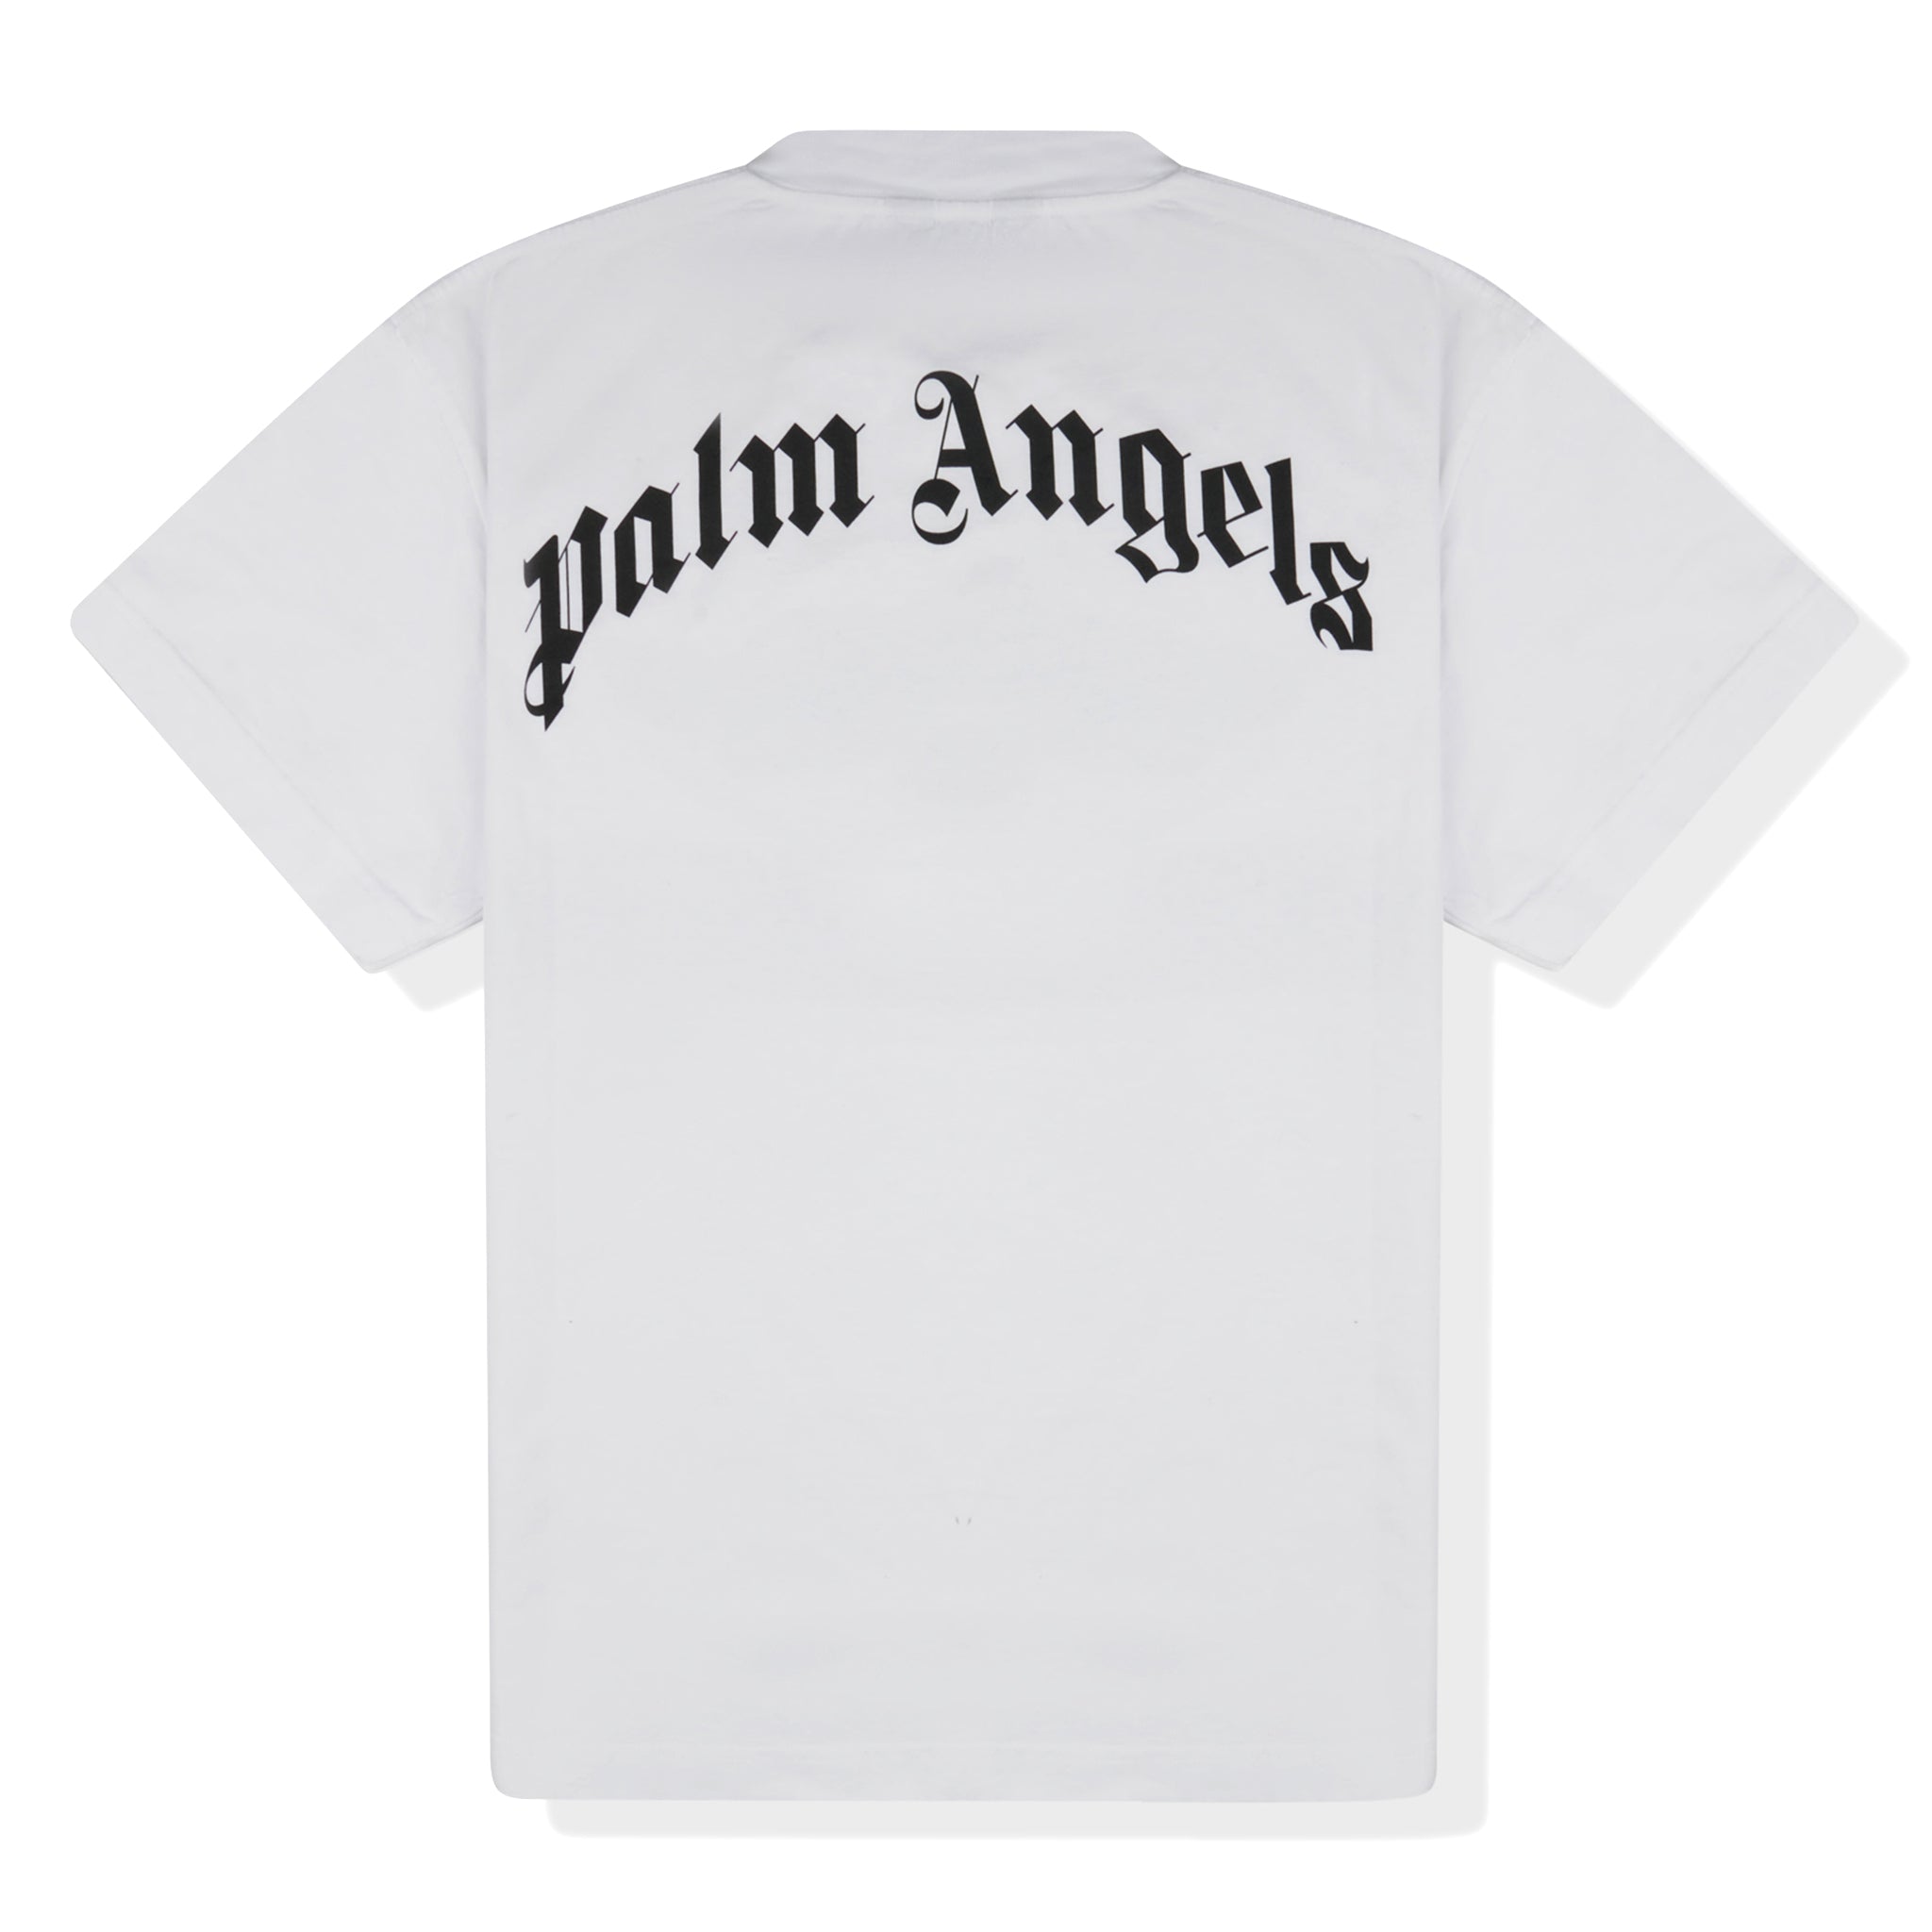 Image of Palm Angels Shark Print White T Shirt